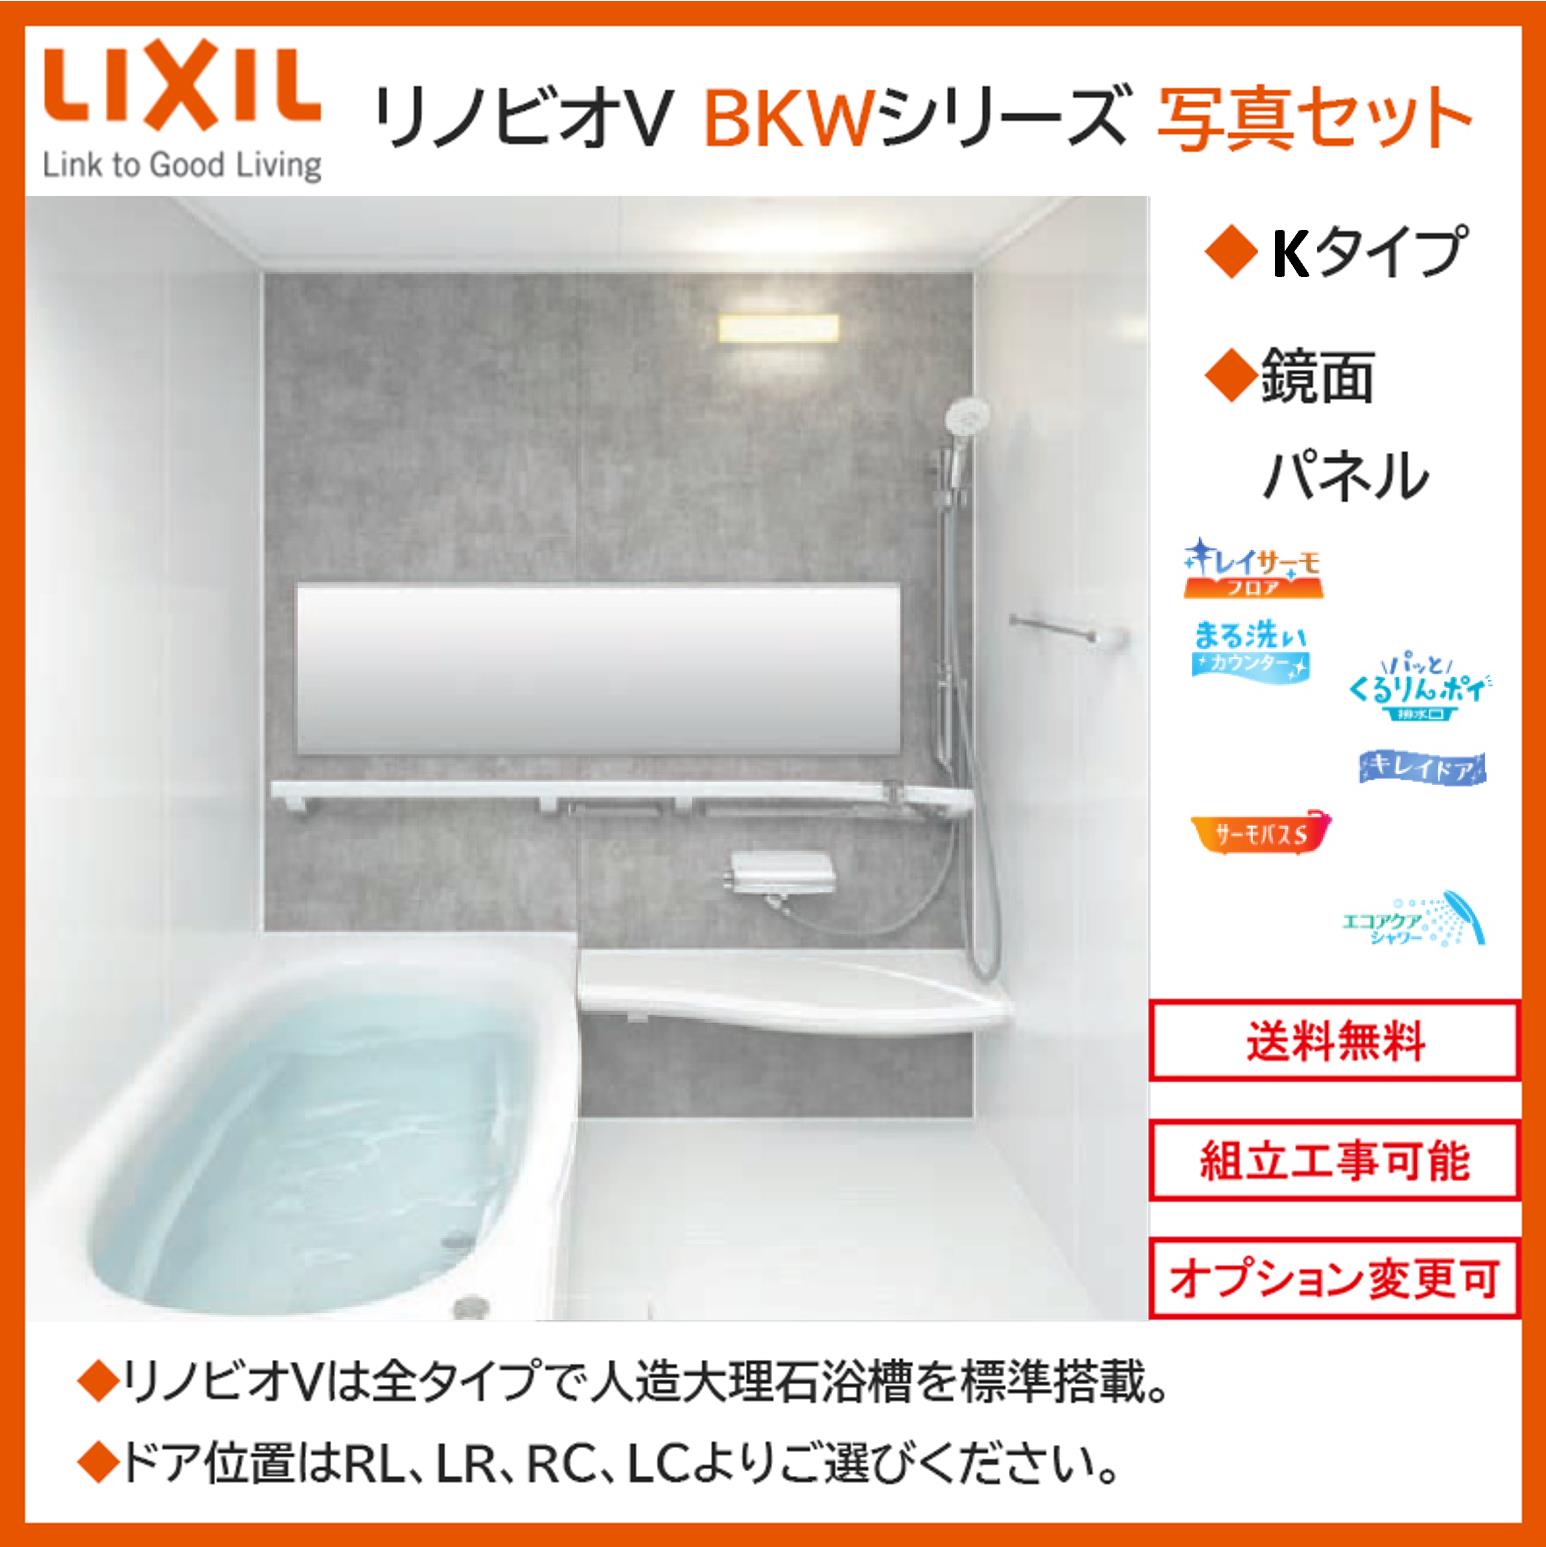 LIXIL リノビオV BKWシリーズ Kタイプ 1616サイズ 写真セット 鏡面パネル BKW-1616LBK システムバスルーム（オプション対応，メーカー直送）【送料無料】